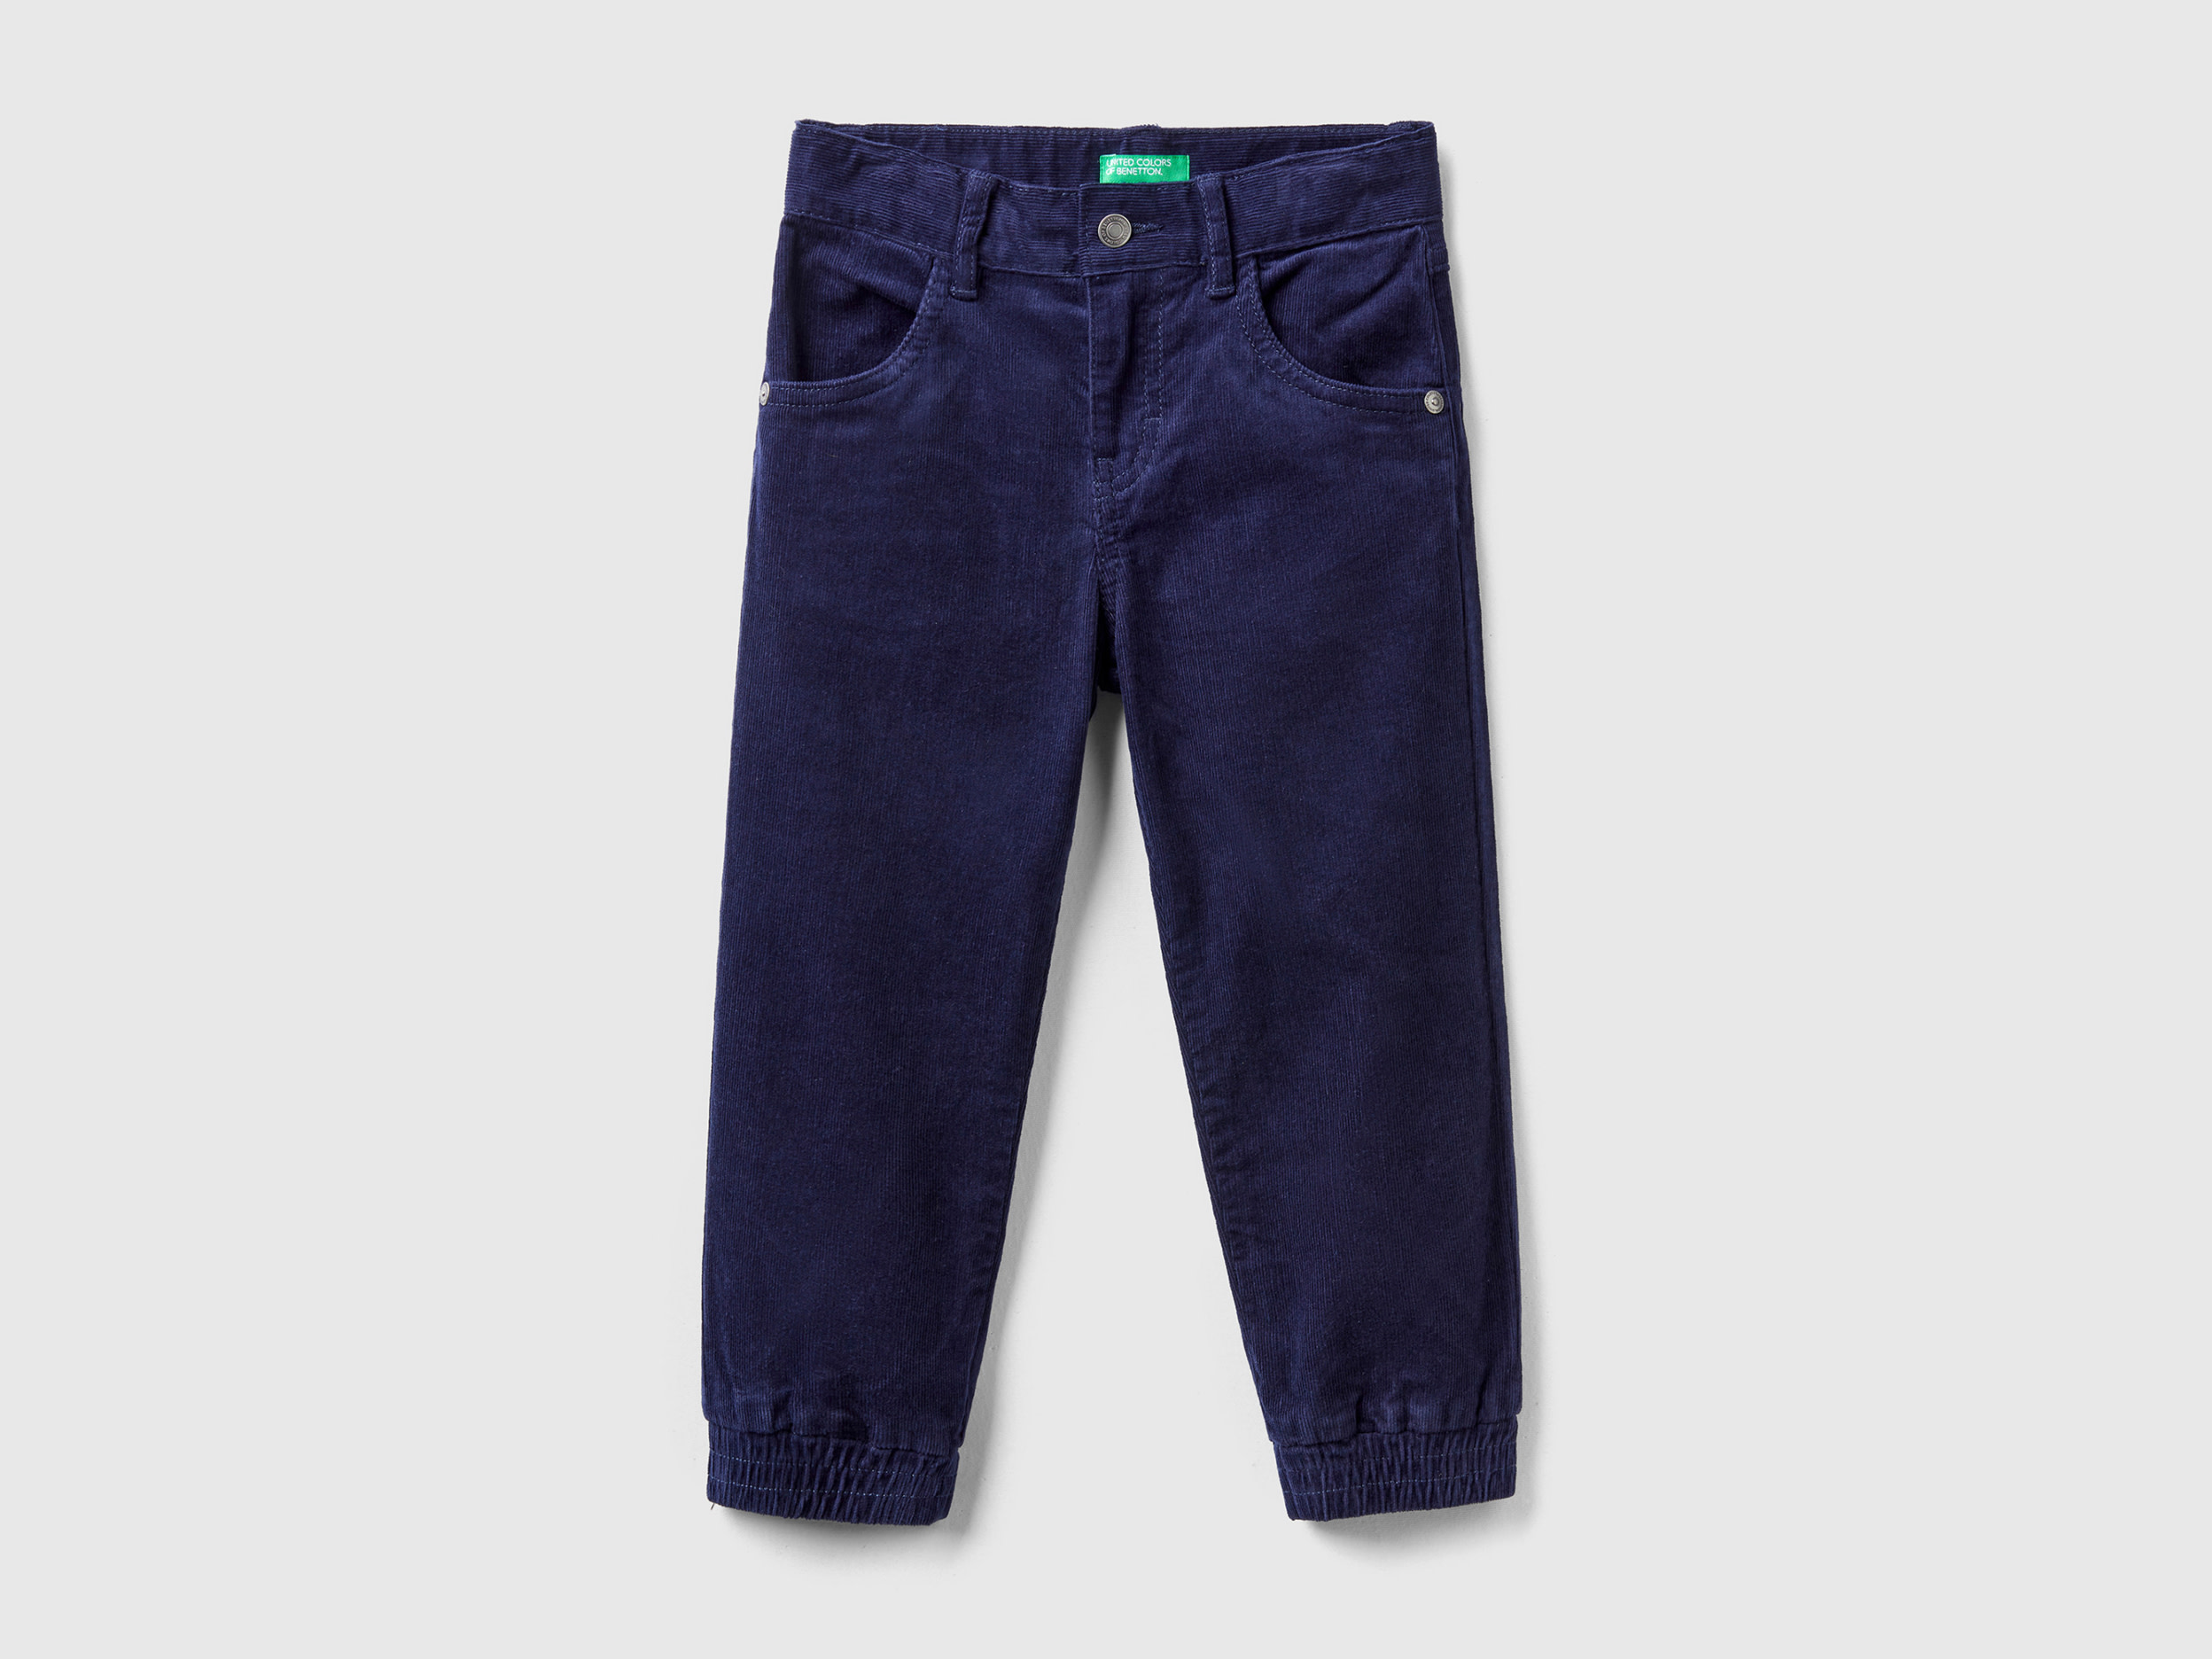 Benetton, Stretch Corduroy Trousers, size 12-18, Dark Blue, Kids